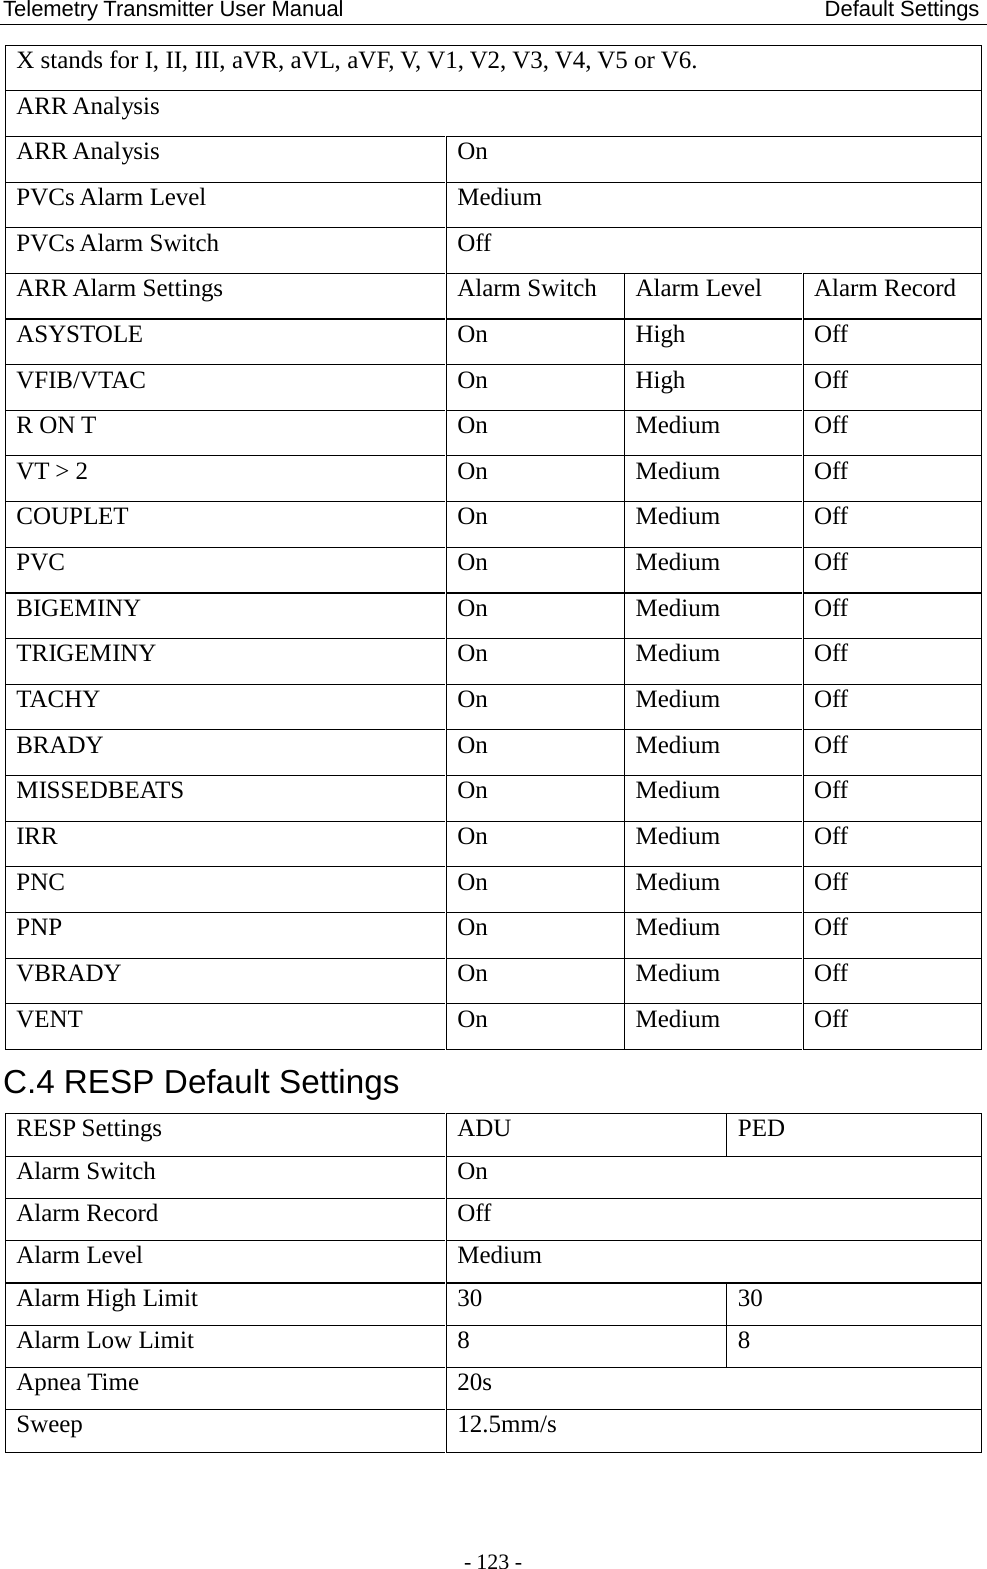 Telemetry Transmitter User Manual                                            Default Settings X stands for I, II, III, aVR, aVL, aVF, V, V1, V2, V3, V4, V5 or V6. ARR Analysis   ARR Analysis On PVCs Alarm Level Medium PVCs Alarm Switch Off ARR Alarm Settings Alarm Switch Alarm Level Alarm Record ASYSTOLE On High Off VFIB/VTAC On High Off R ON T On Medium Off VT &gt; 2 On Medium Off COUPLET On Medium Off PVC On Medium Off BIGEMINY On Medium Off TRIGEMINY On Medium Off TACHY On Medium Off BRADY On Medium Off MISSEDBEATS On Medium Off IRR On Medium Off PNC On Medium Off PNP On Medium Off VBRADY On Medium Off VENT On Medium Off C.4 RESP Default Settings RESP Settings ADU PED Alarm Switch On Alarm Record Off Alarm Level Medium Alarm High Limit 30 30 Alarm Low Limit 8 8 Apnea Time 20s Sweep 12.5mm/s - 123 - 